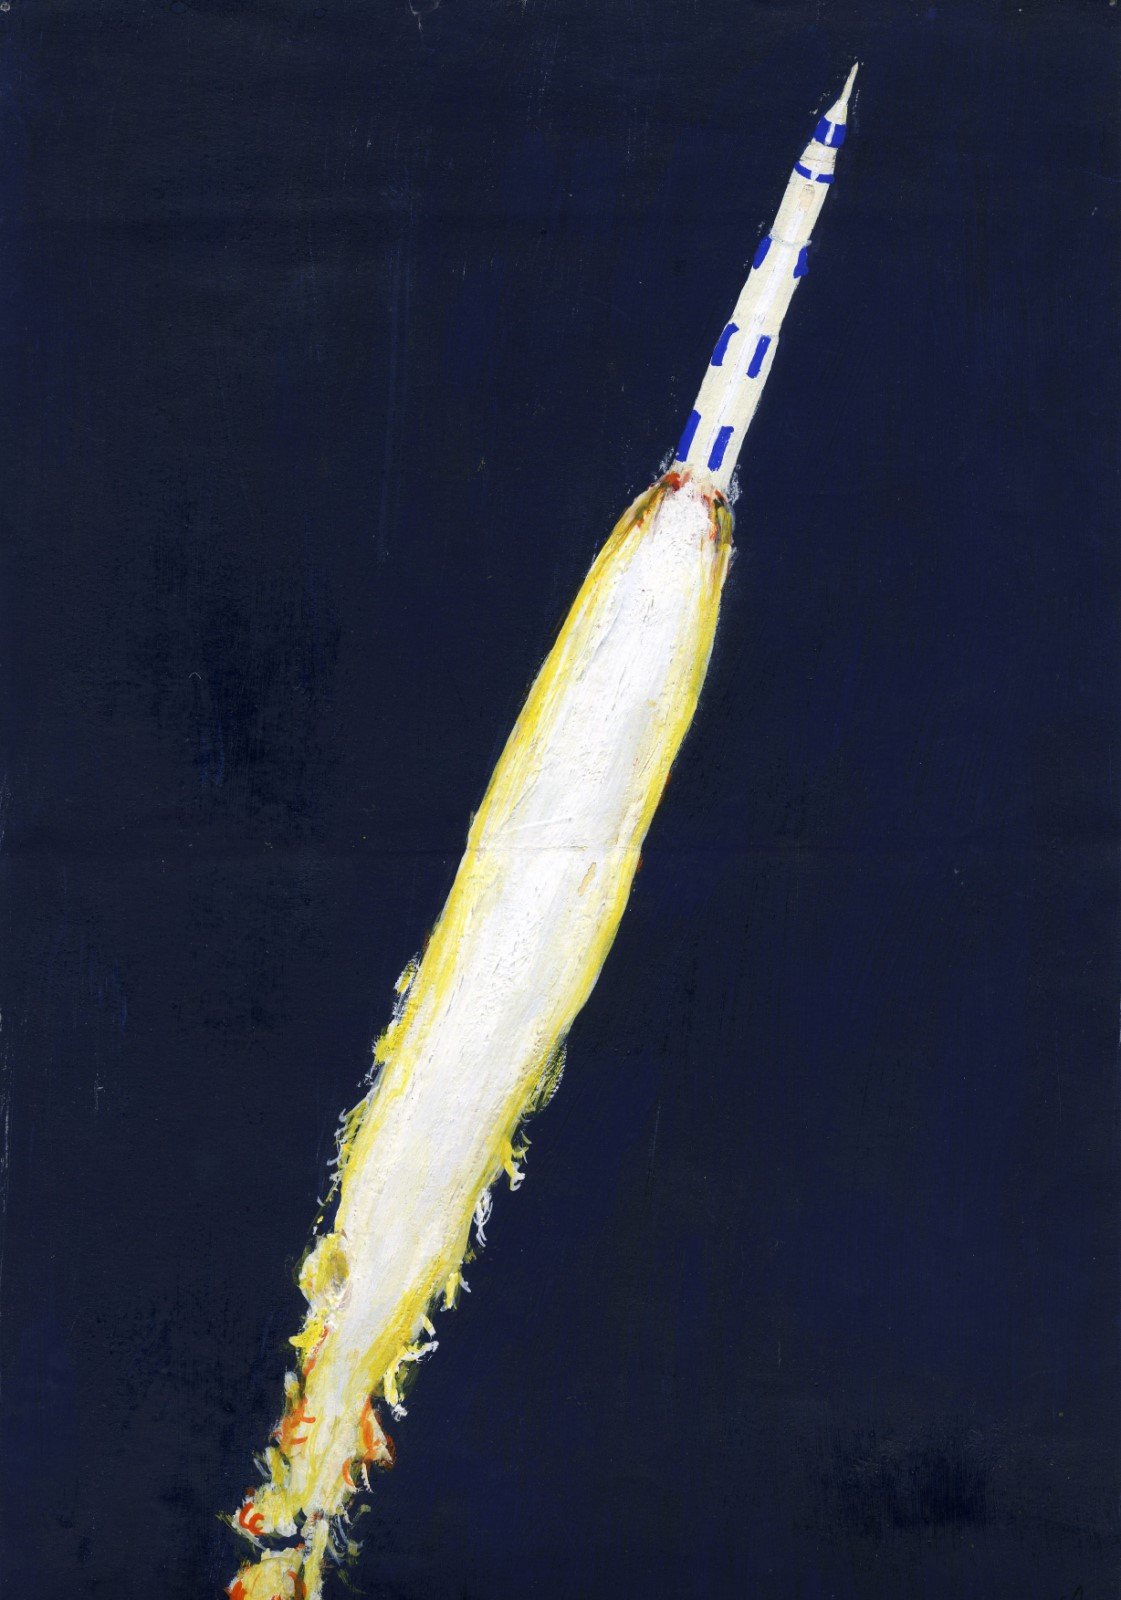 Lancement Apollo 11